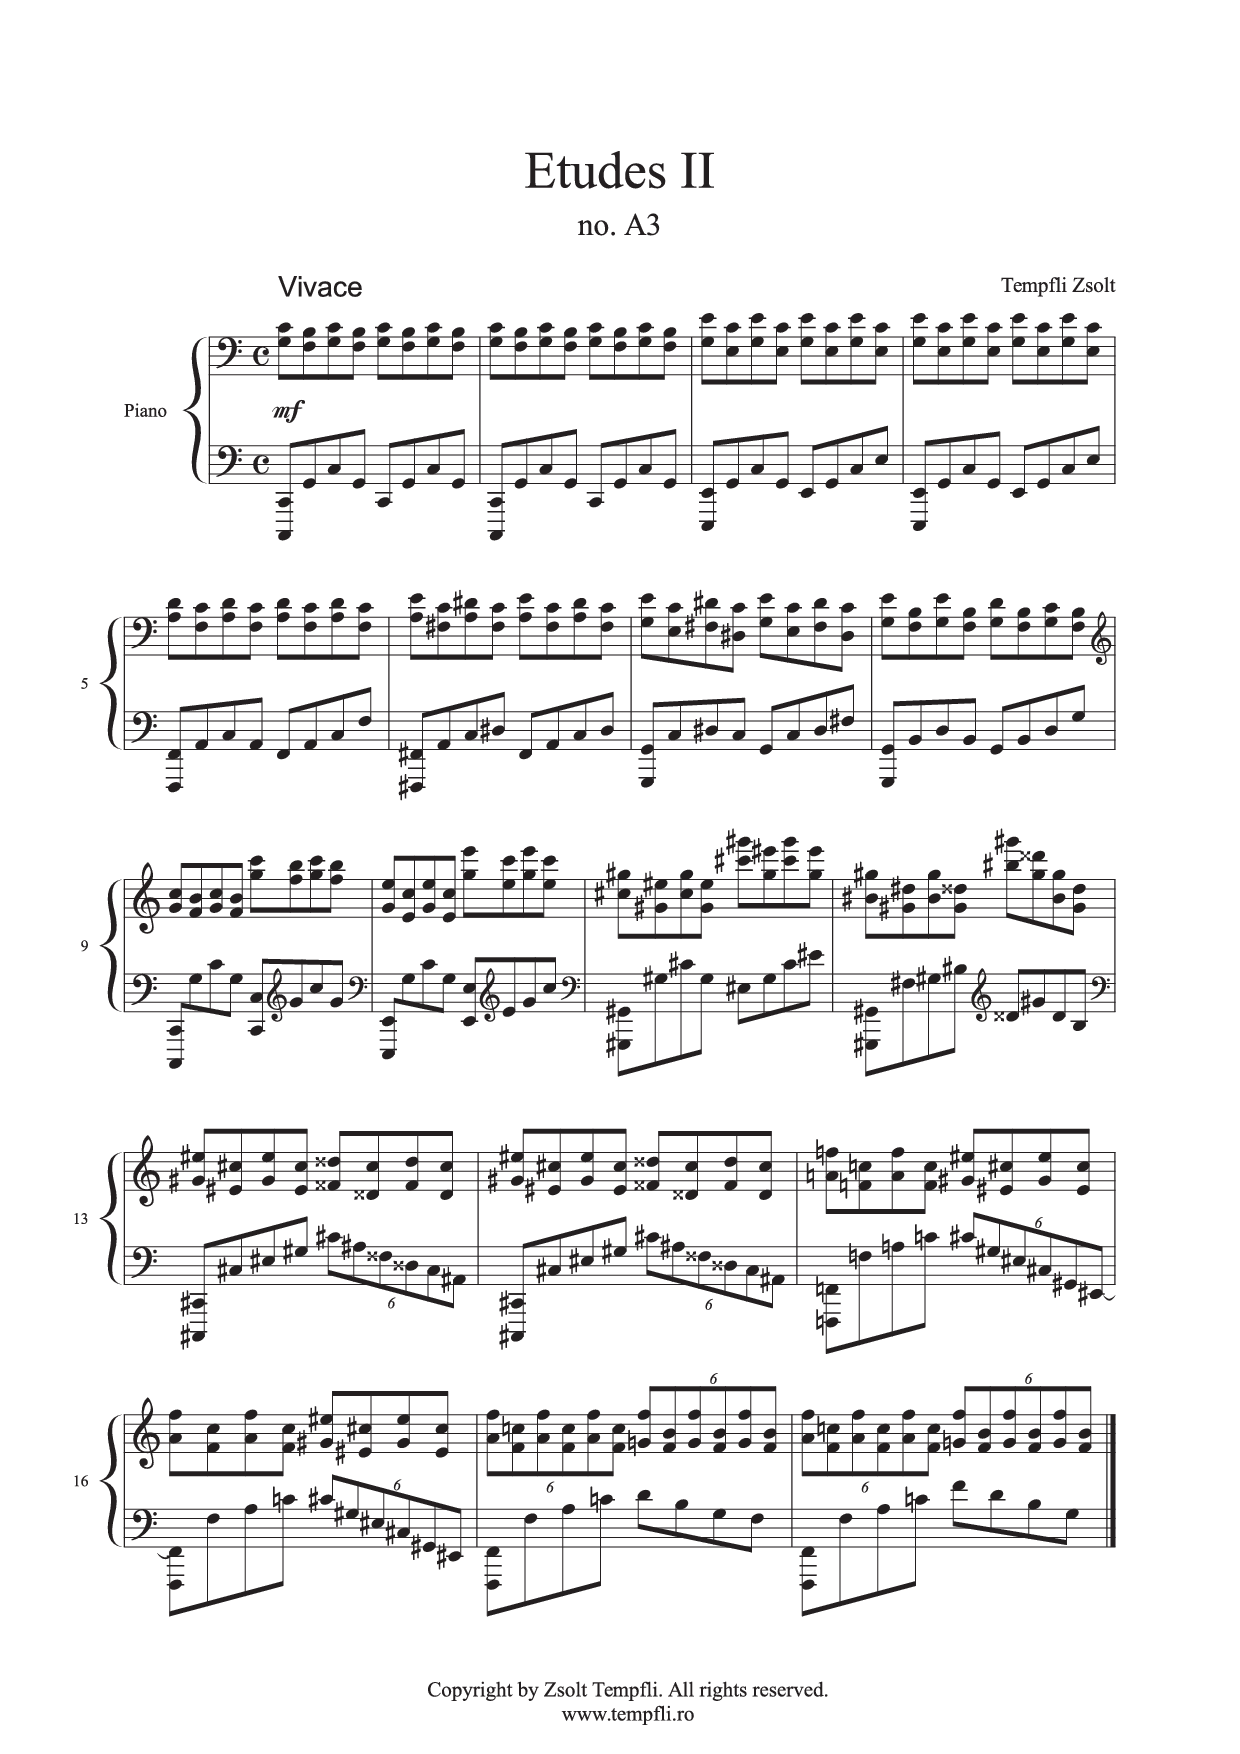 Tempfli Zsolt - Etűdök II A3 op. 25 no. A3 zongorára